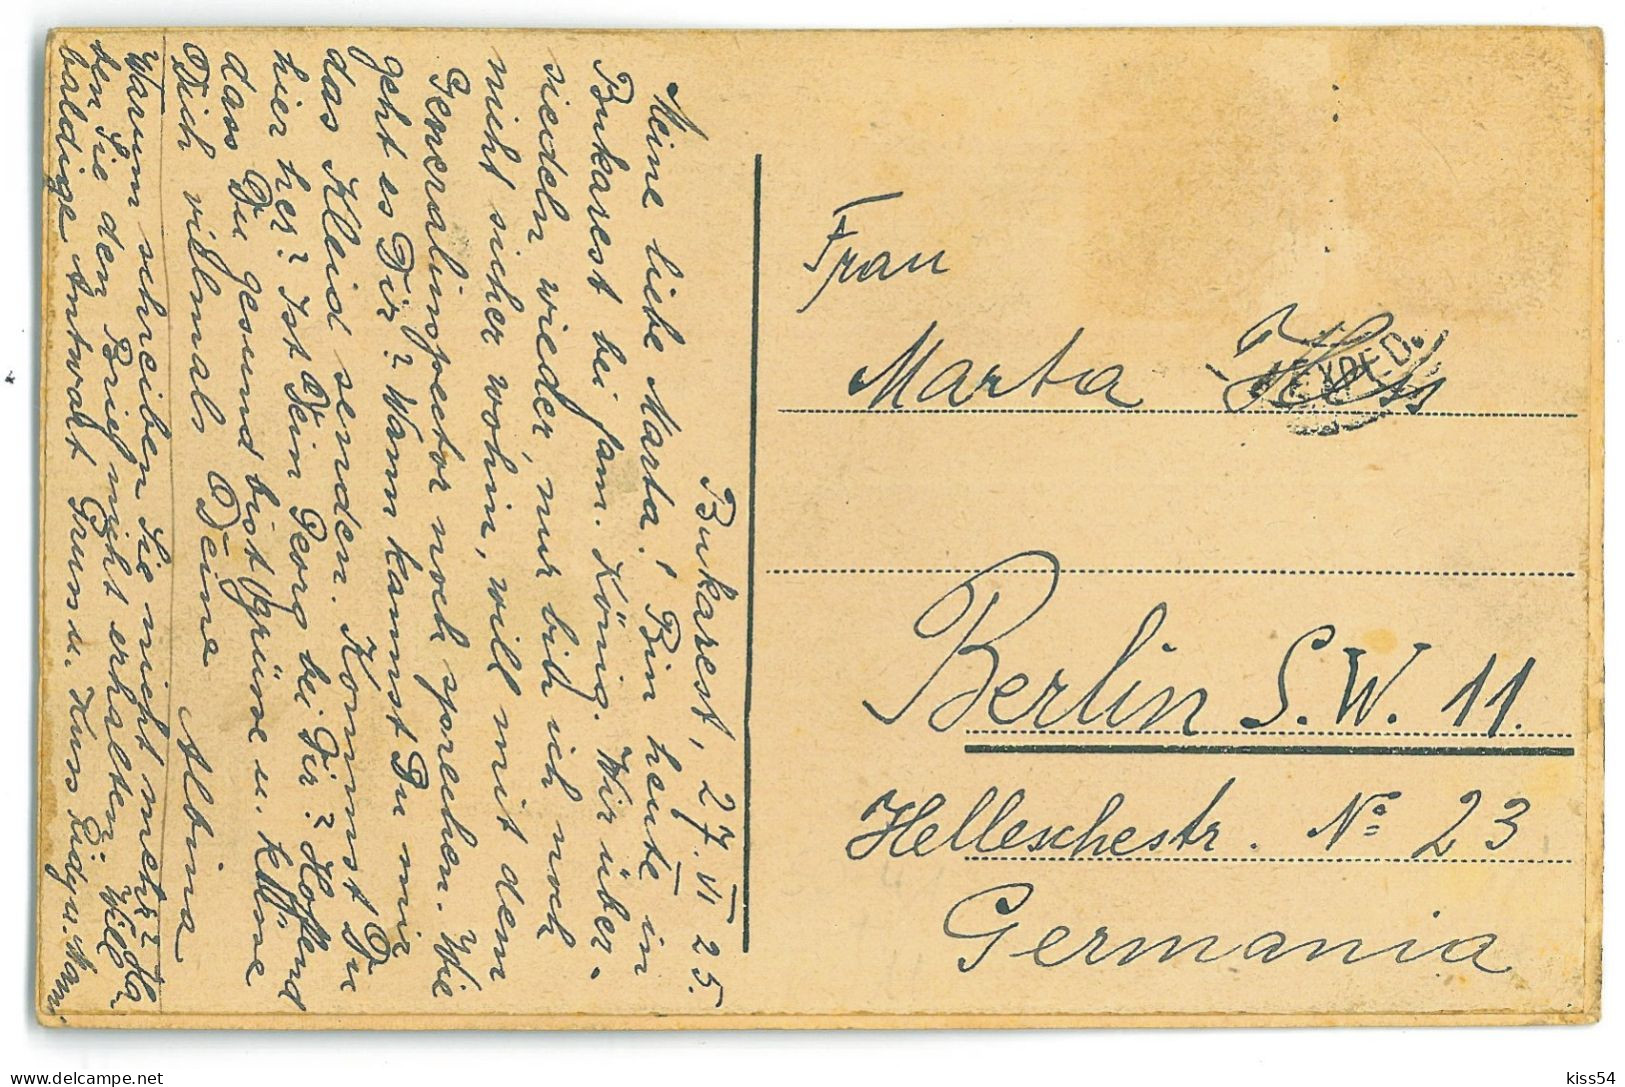 RO 91 - 23659 BUCURESTI, Leporello, Romania - Old Postcard + 10 Mini Photo Cards - Used - 1925 - Roumanie